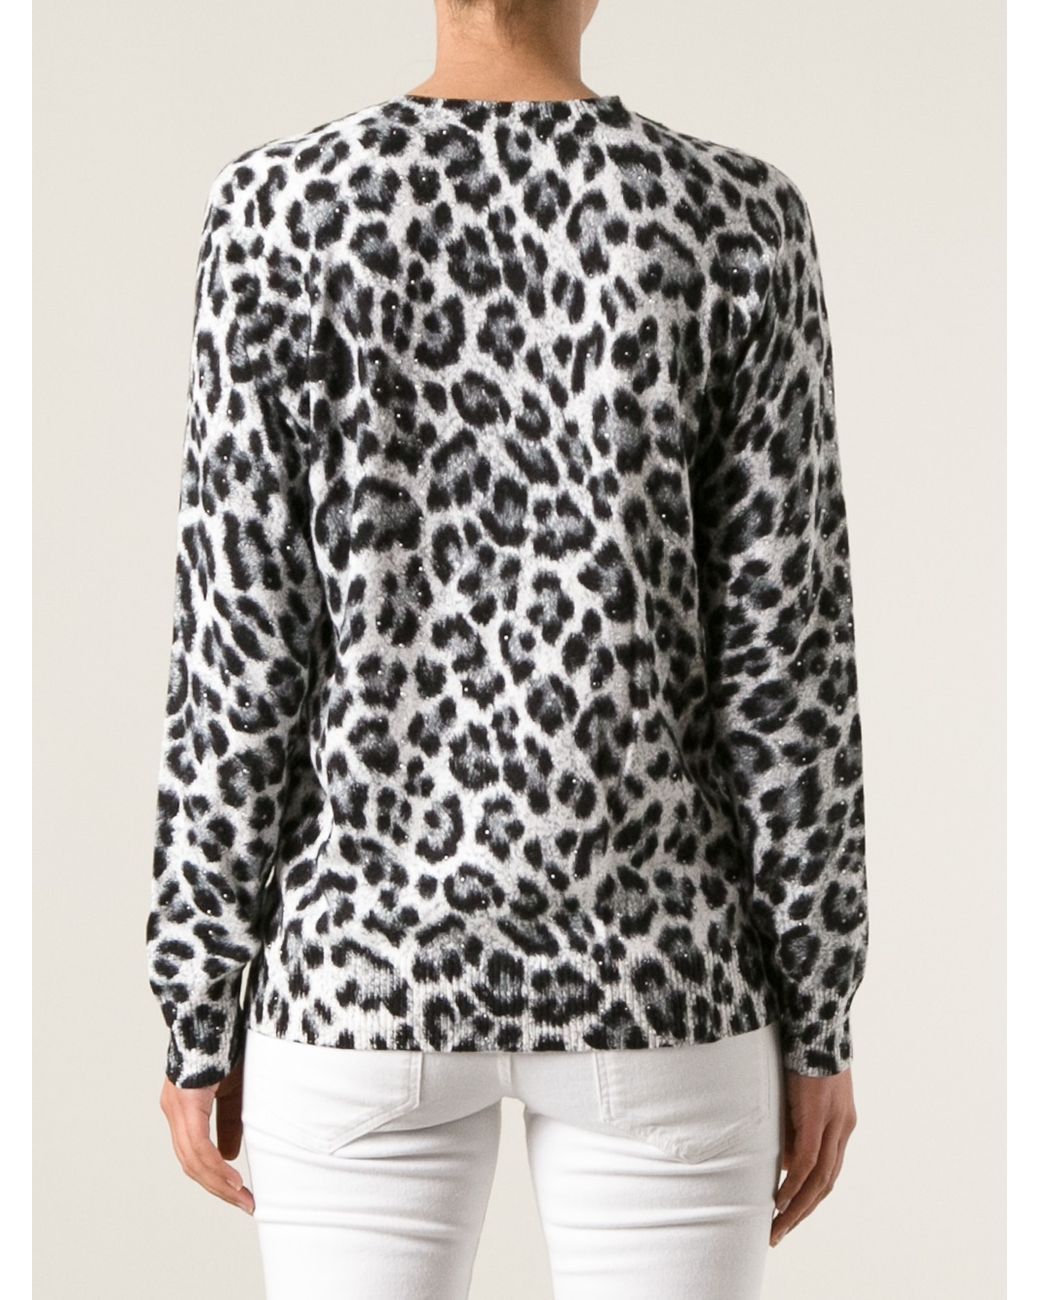 MICHAEL Michael Kors Leopard Print Sweater in Black | Lyst